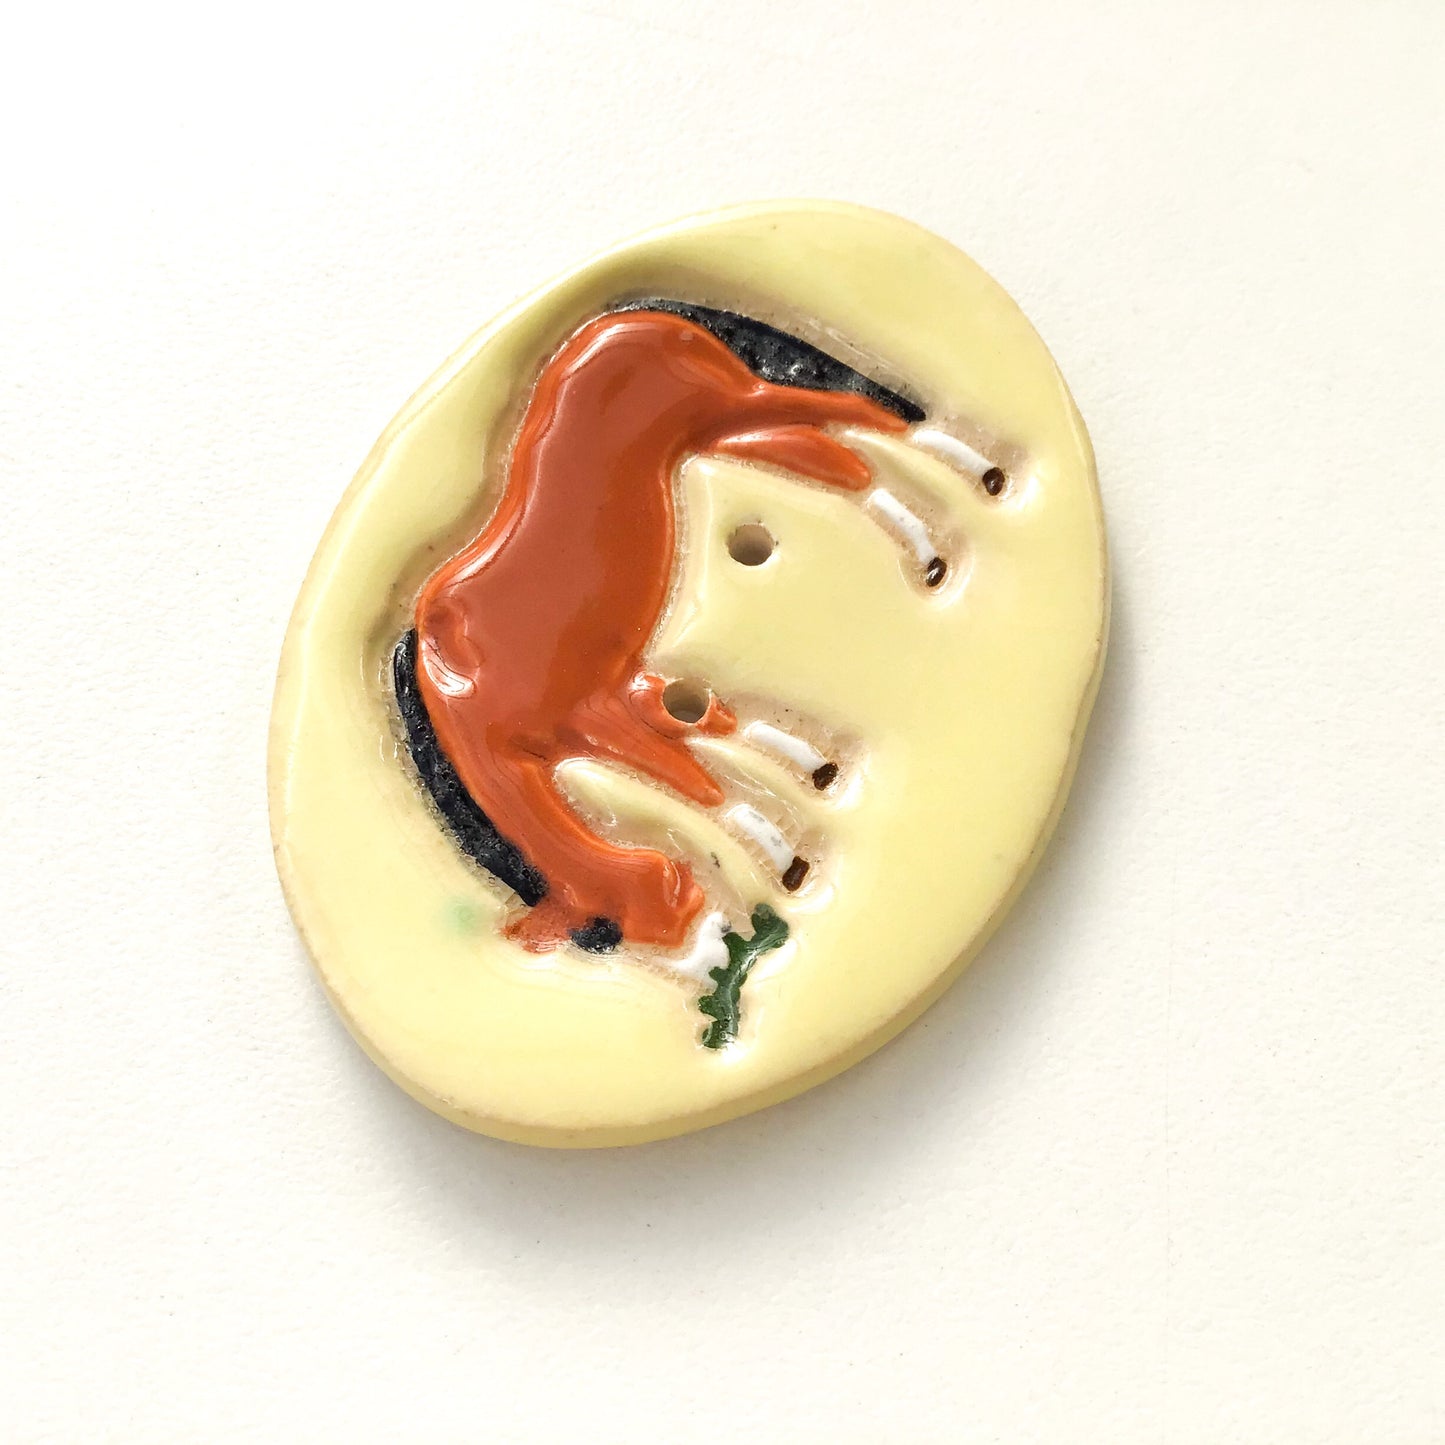 Large Ceramic Horse Button - Decorative Clay Horse Button - 2 1/8" x 1 5/8"